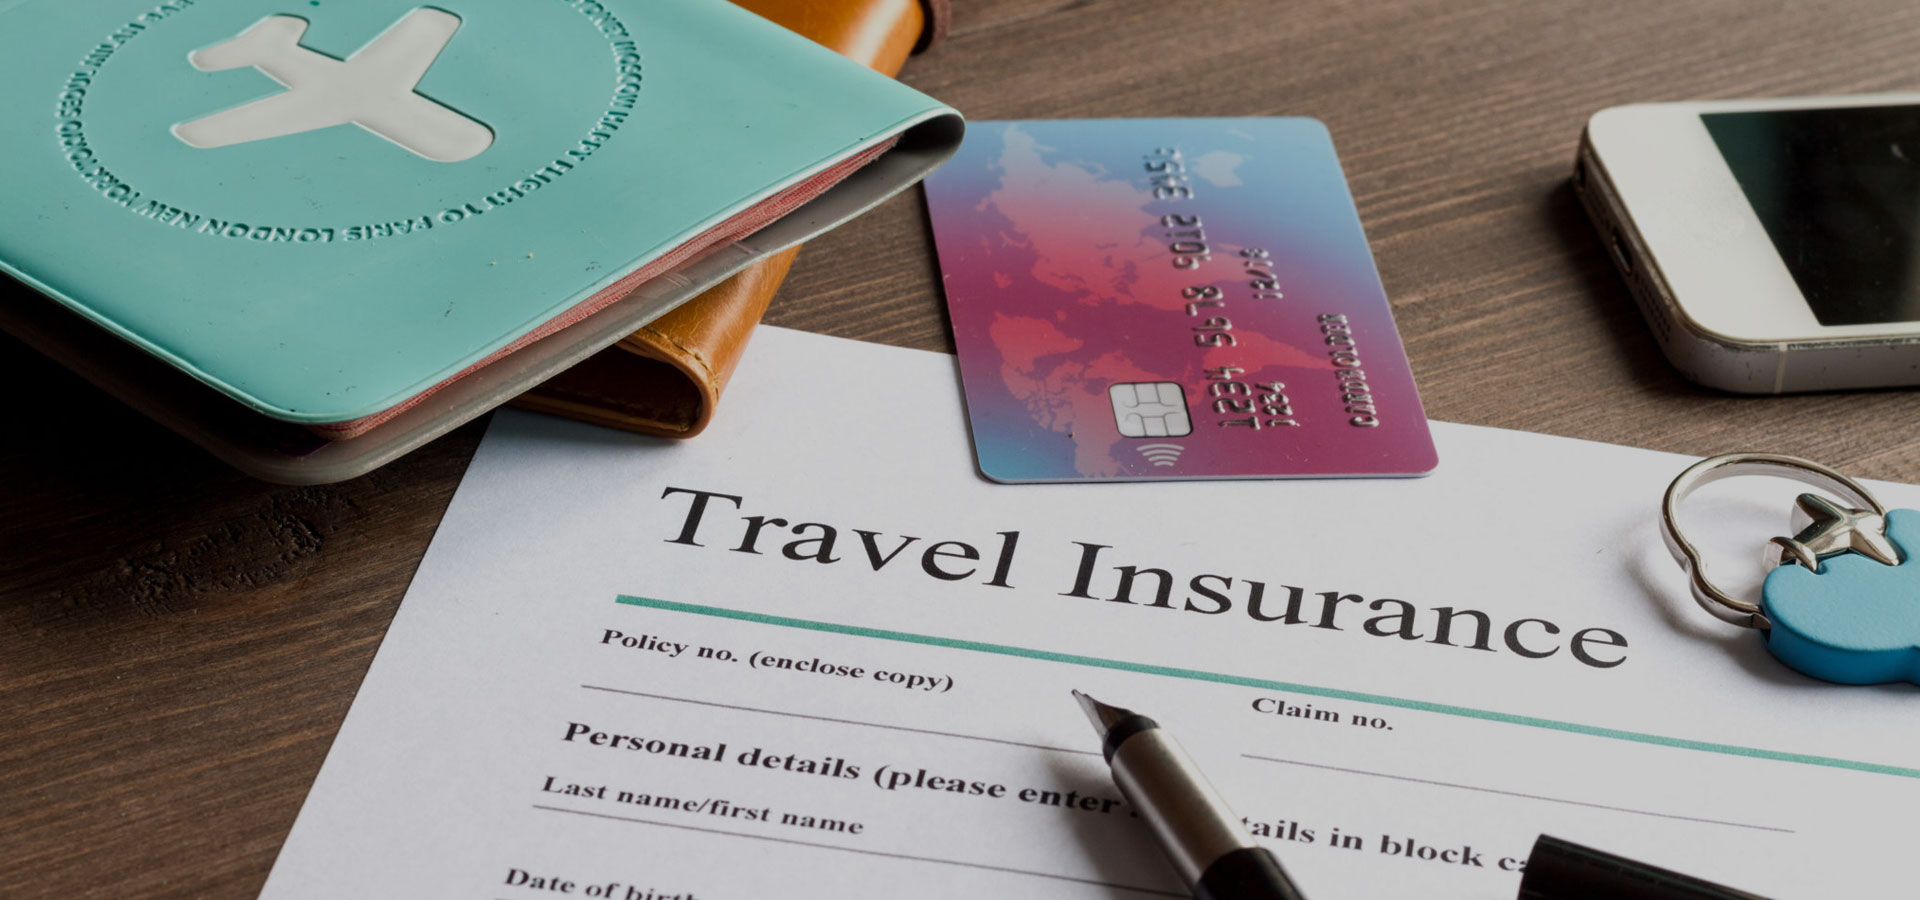 Tanzania Travel Insurance